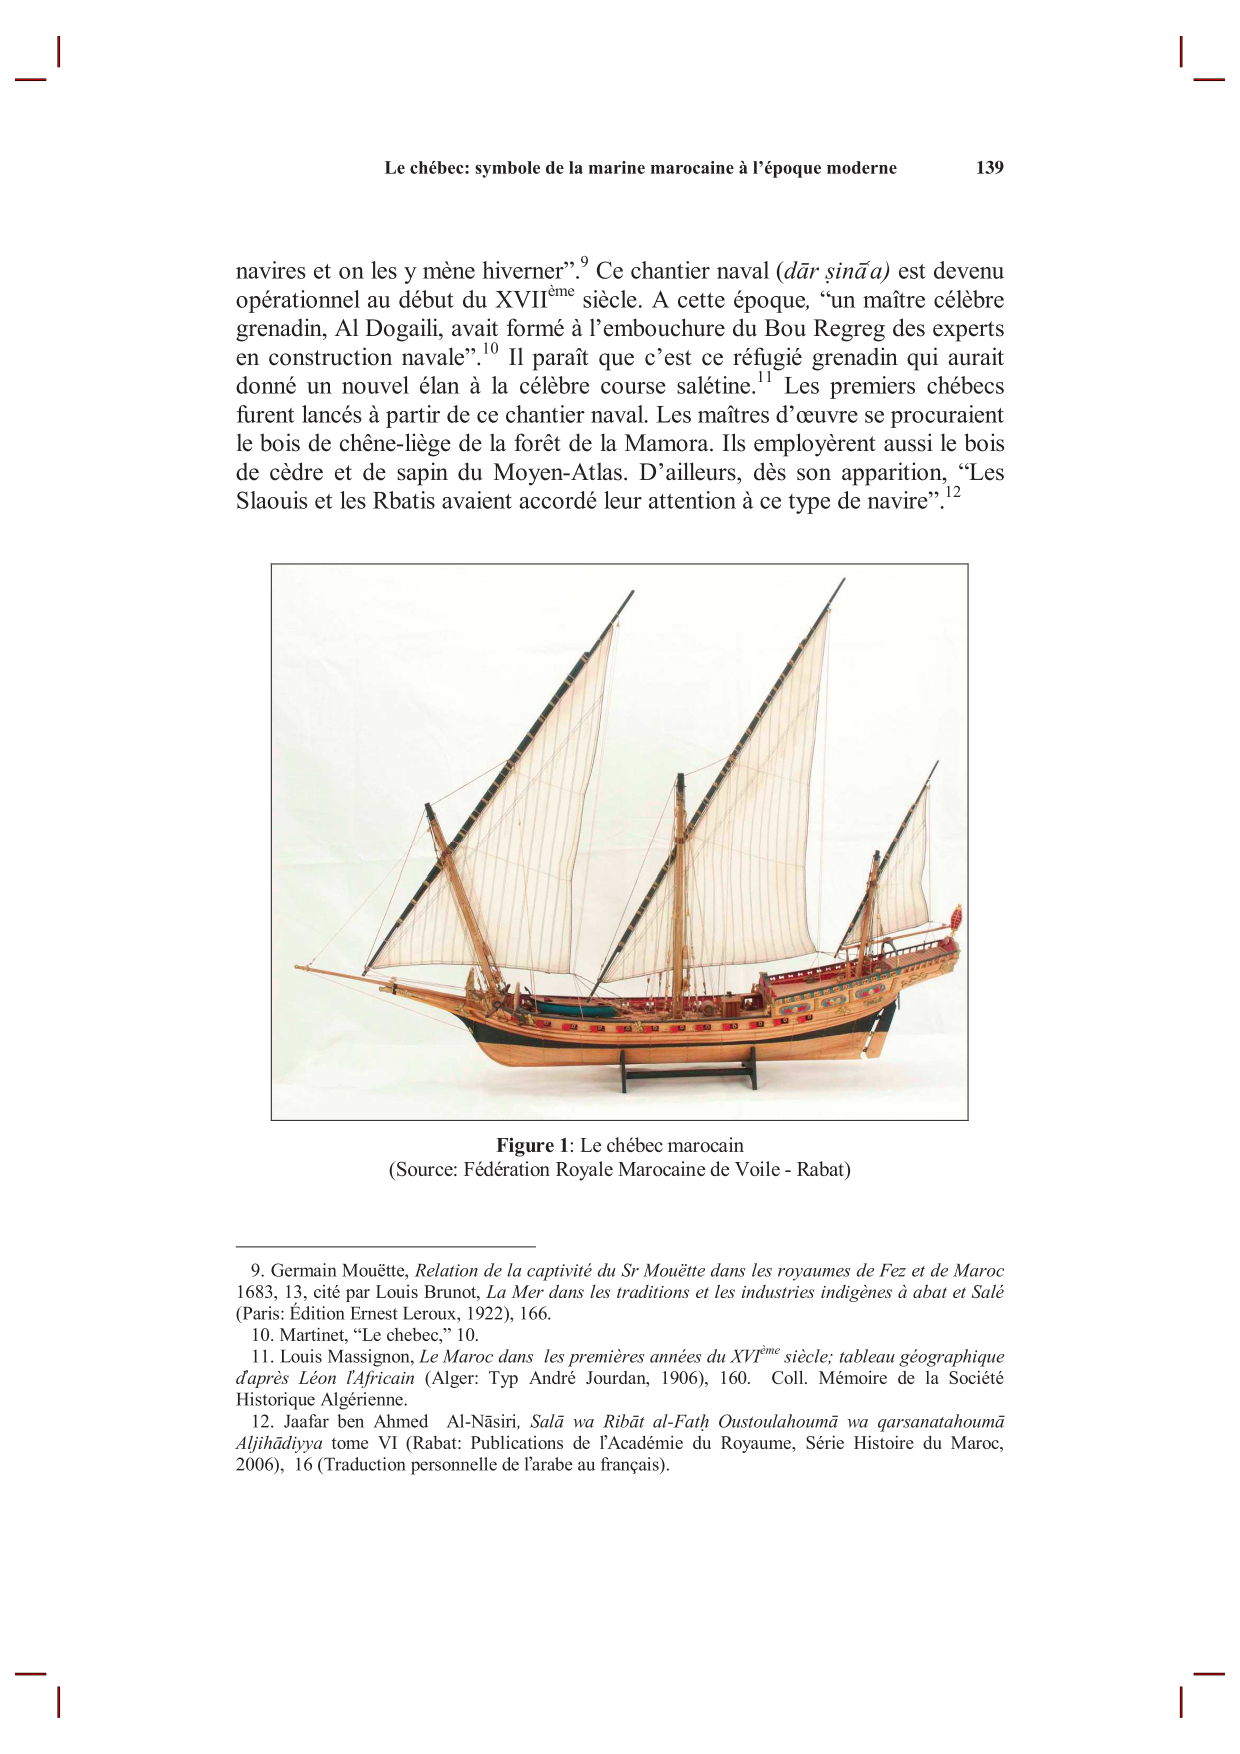 Histoire navale militaire marocaine - Page 3 42544802474_c4cbb83bae_o